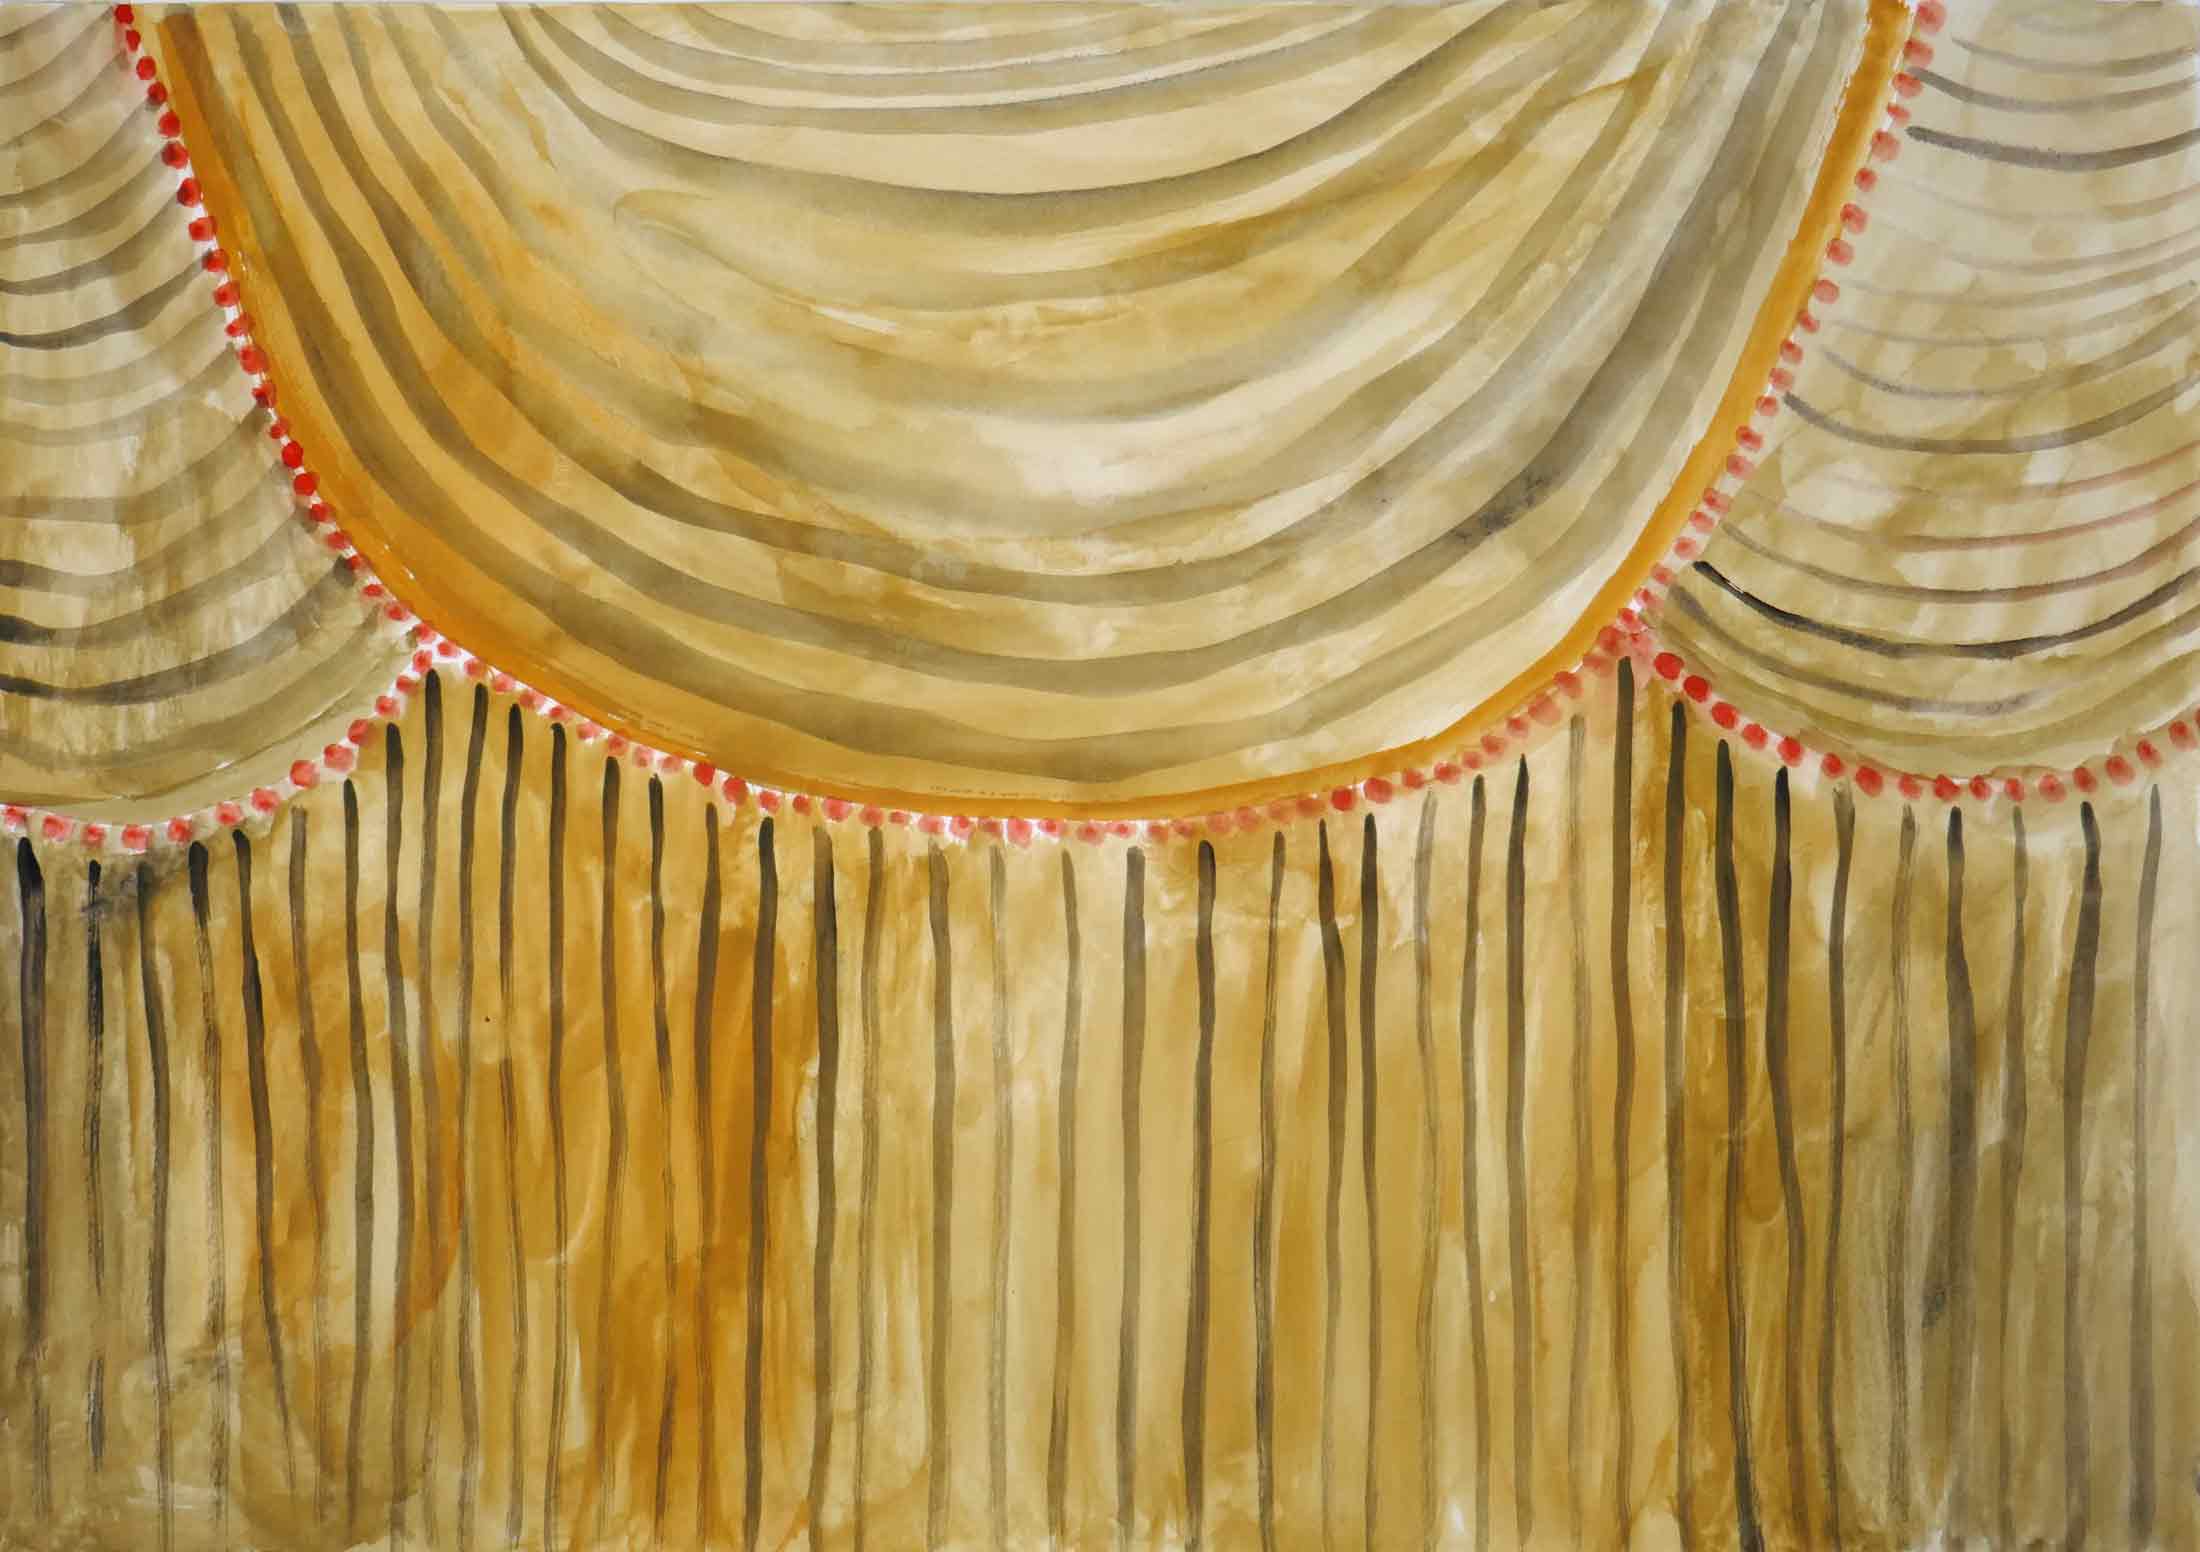   Doek (Curtain)  gouache, aquarel 29 x 29 cm, 2011 